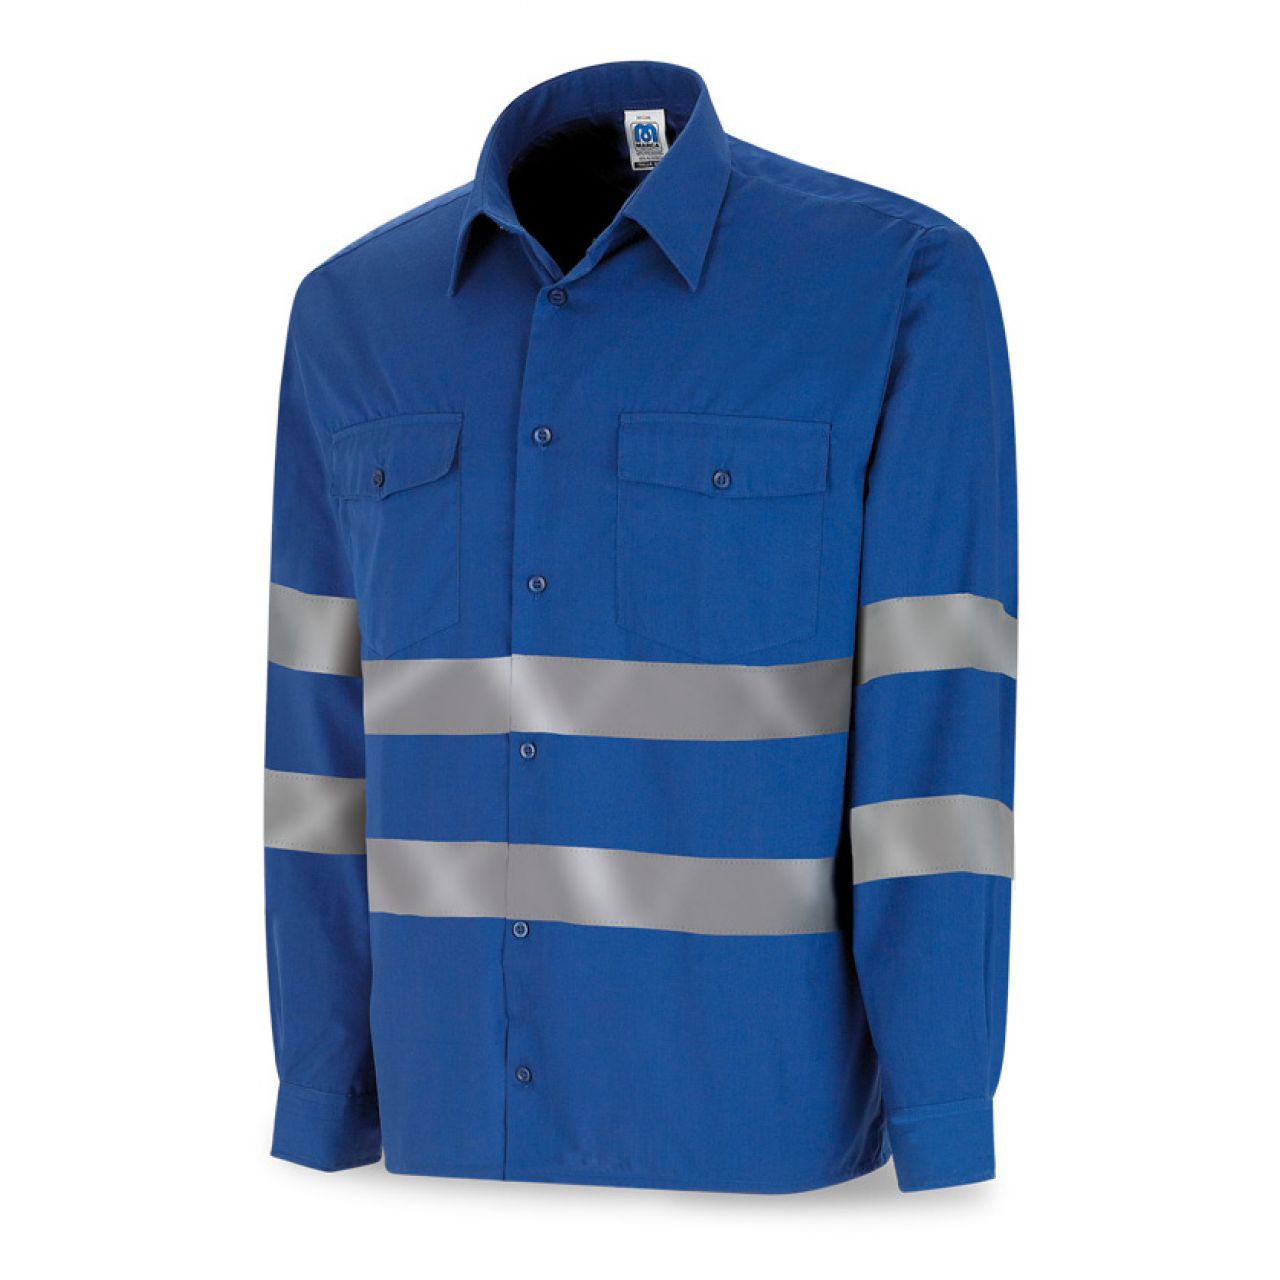 388CRMLAZ Manga Larga. Camisa azulina algodón con bandas reflectantes.